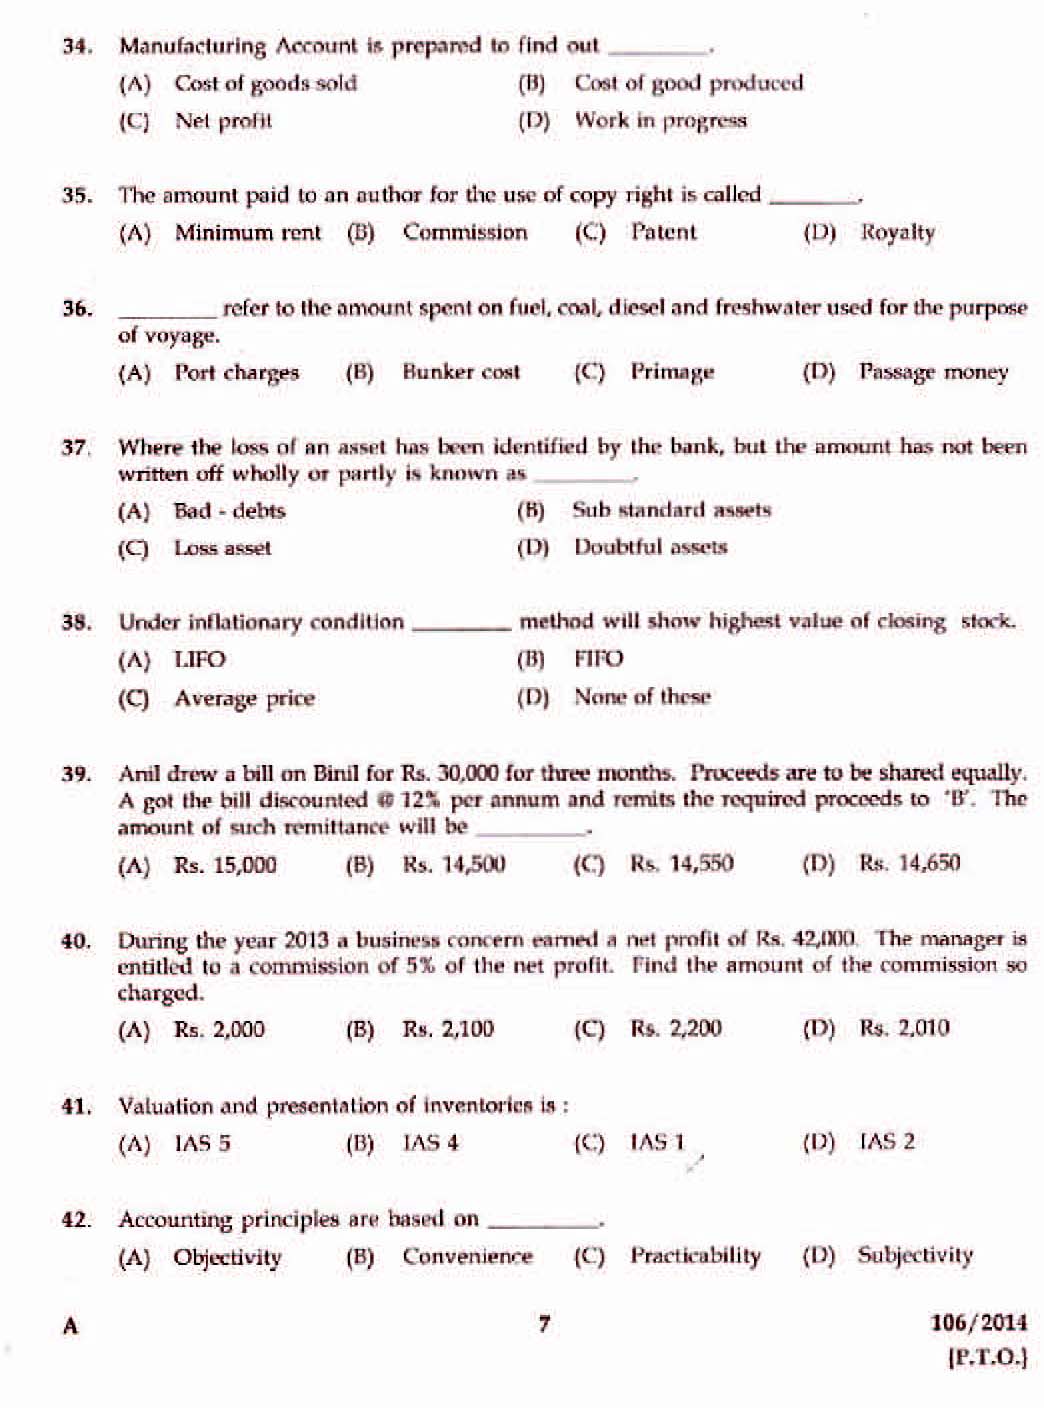 Kerala PSC Divisional Accountant OMR Exam 2014 Question Paper Code 1062014 5